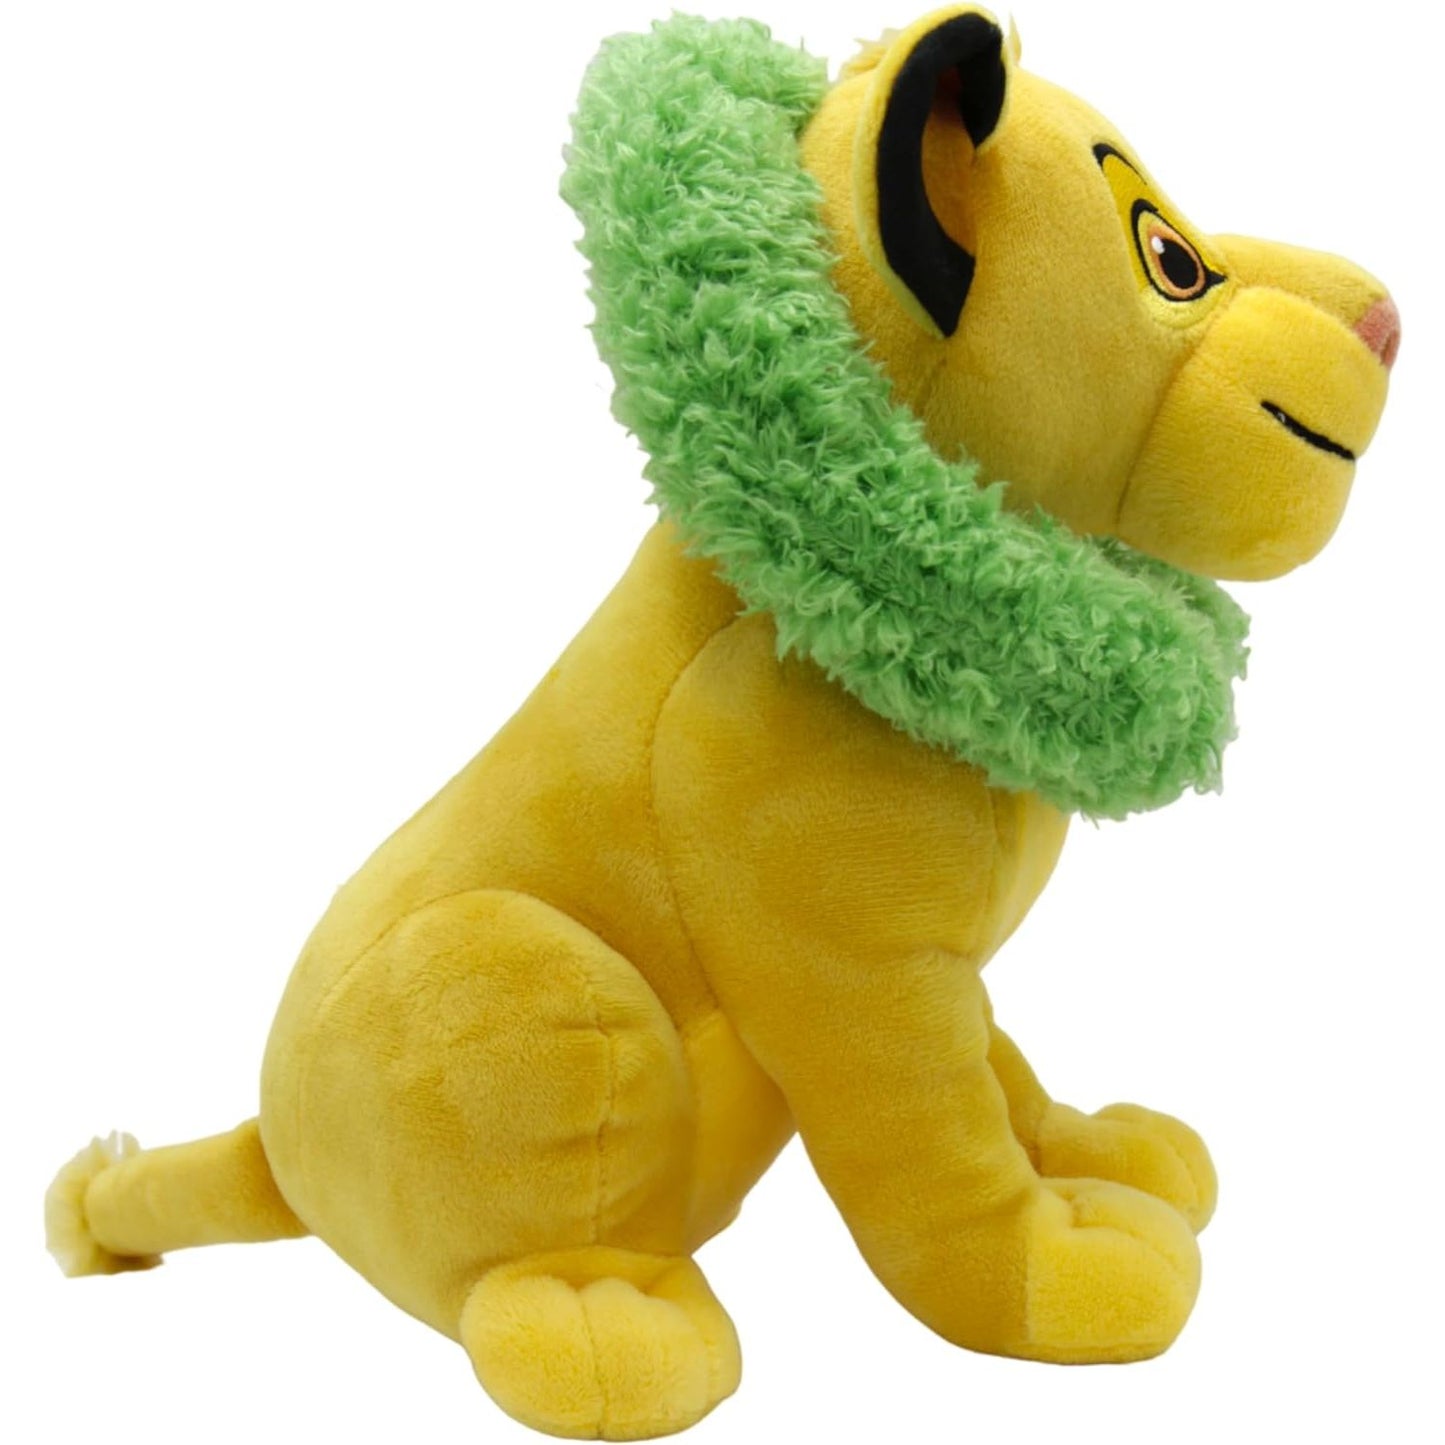 Disney - The Lion King - Simba Christmas Plush